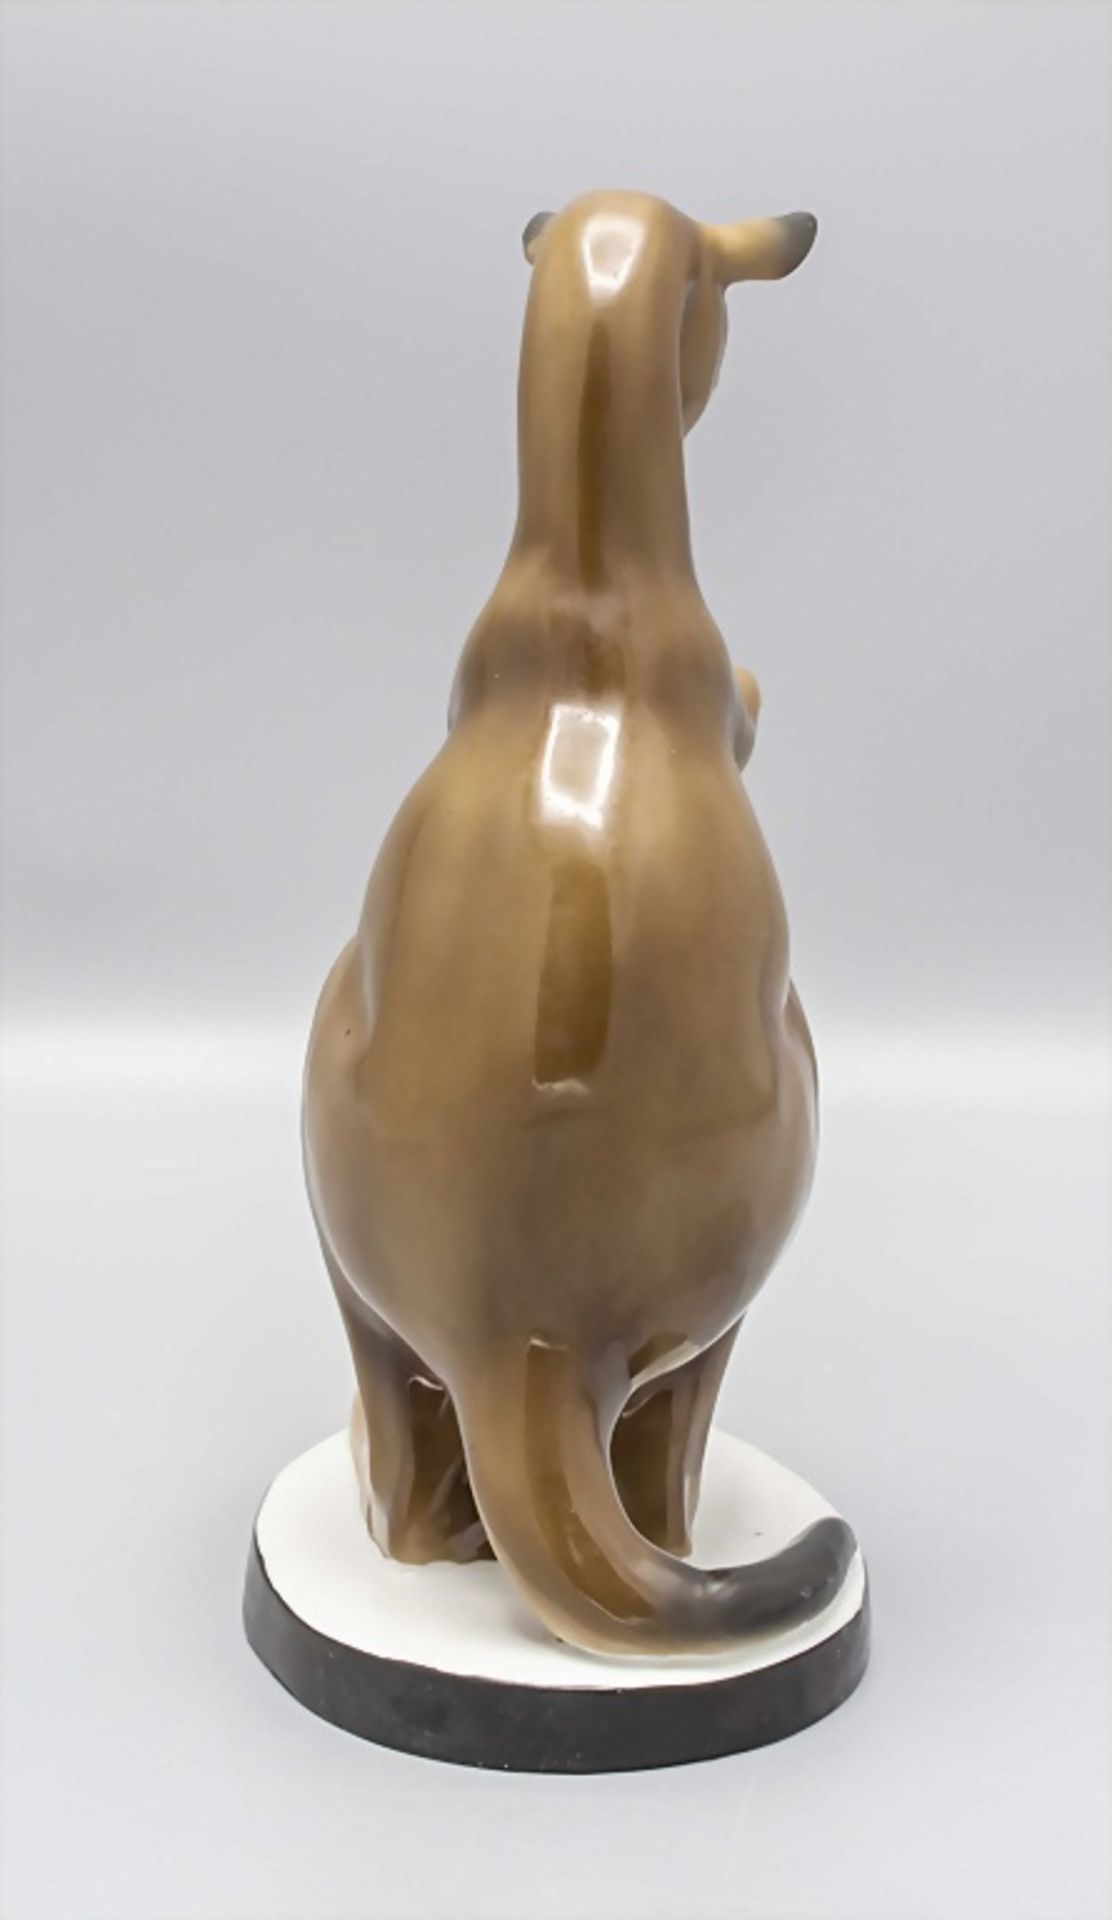 Porzallan Känguru als Halter / A porcelain kangaroo as holder, Anfang 20. Jh. - Image 4 of 6